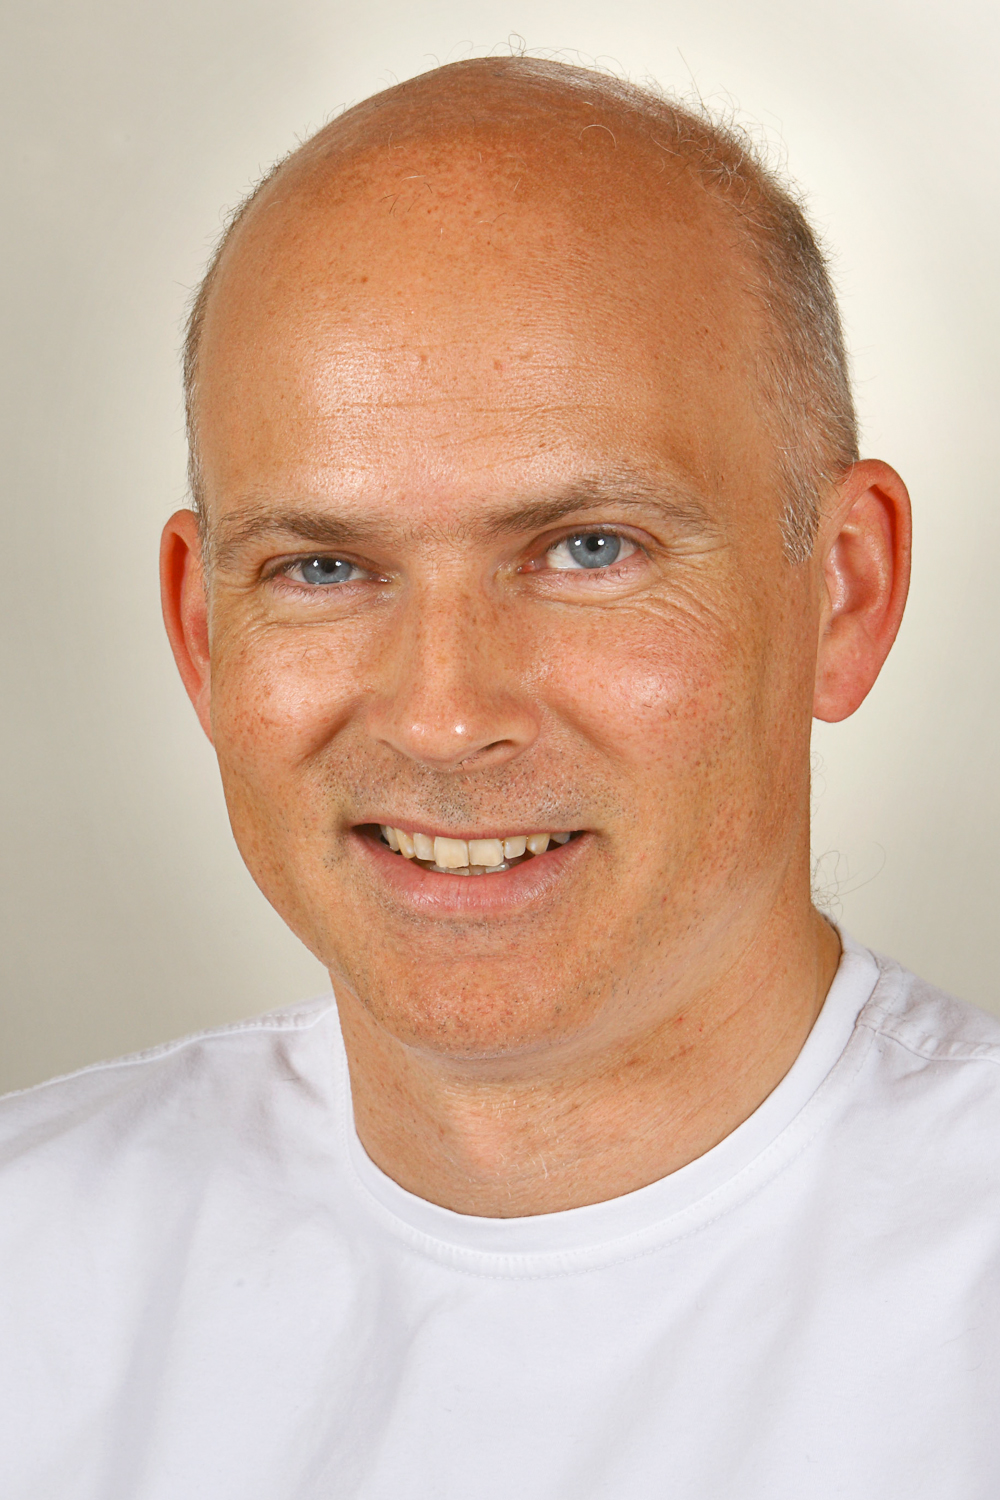 Mats Gustafsson, researcher at VTI